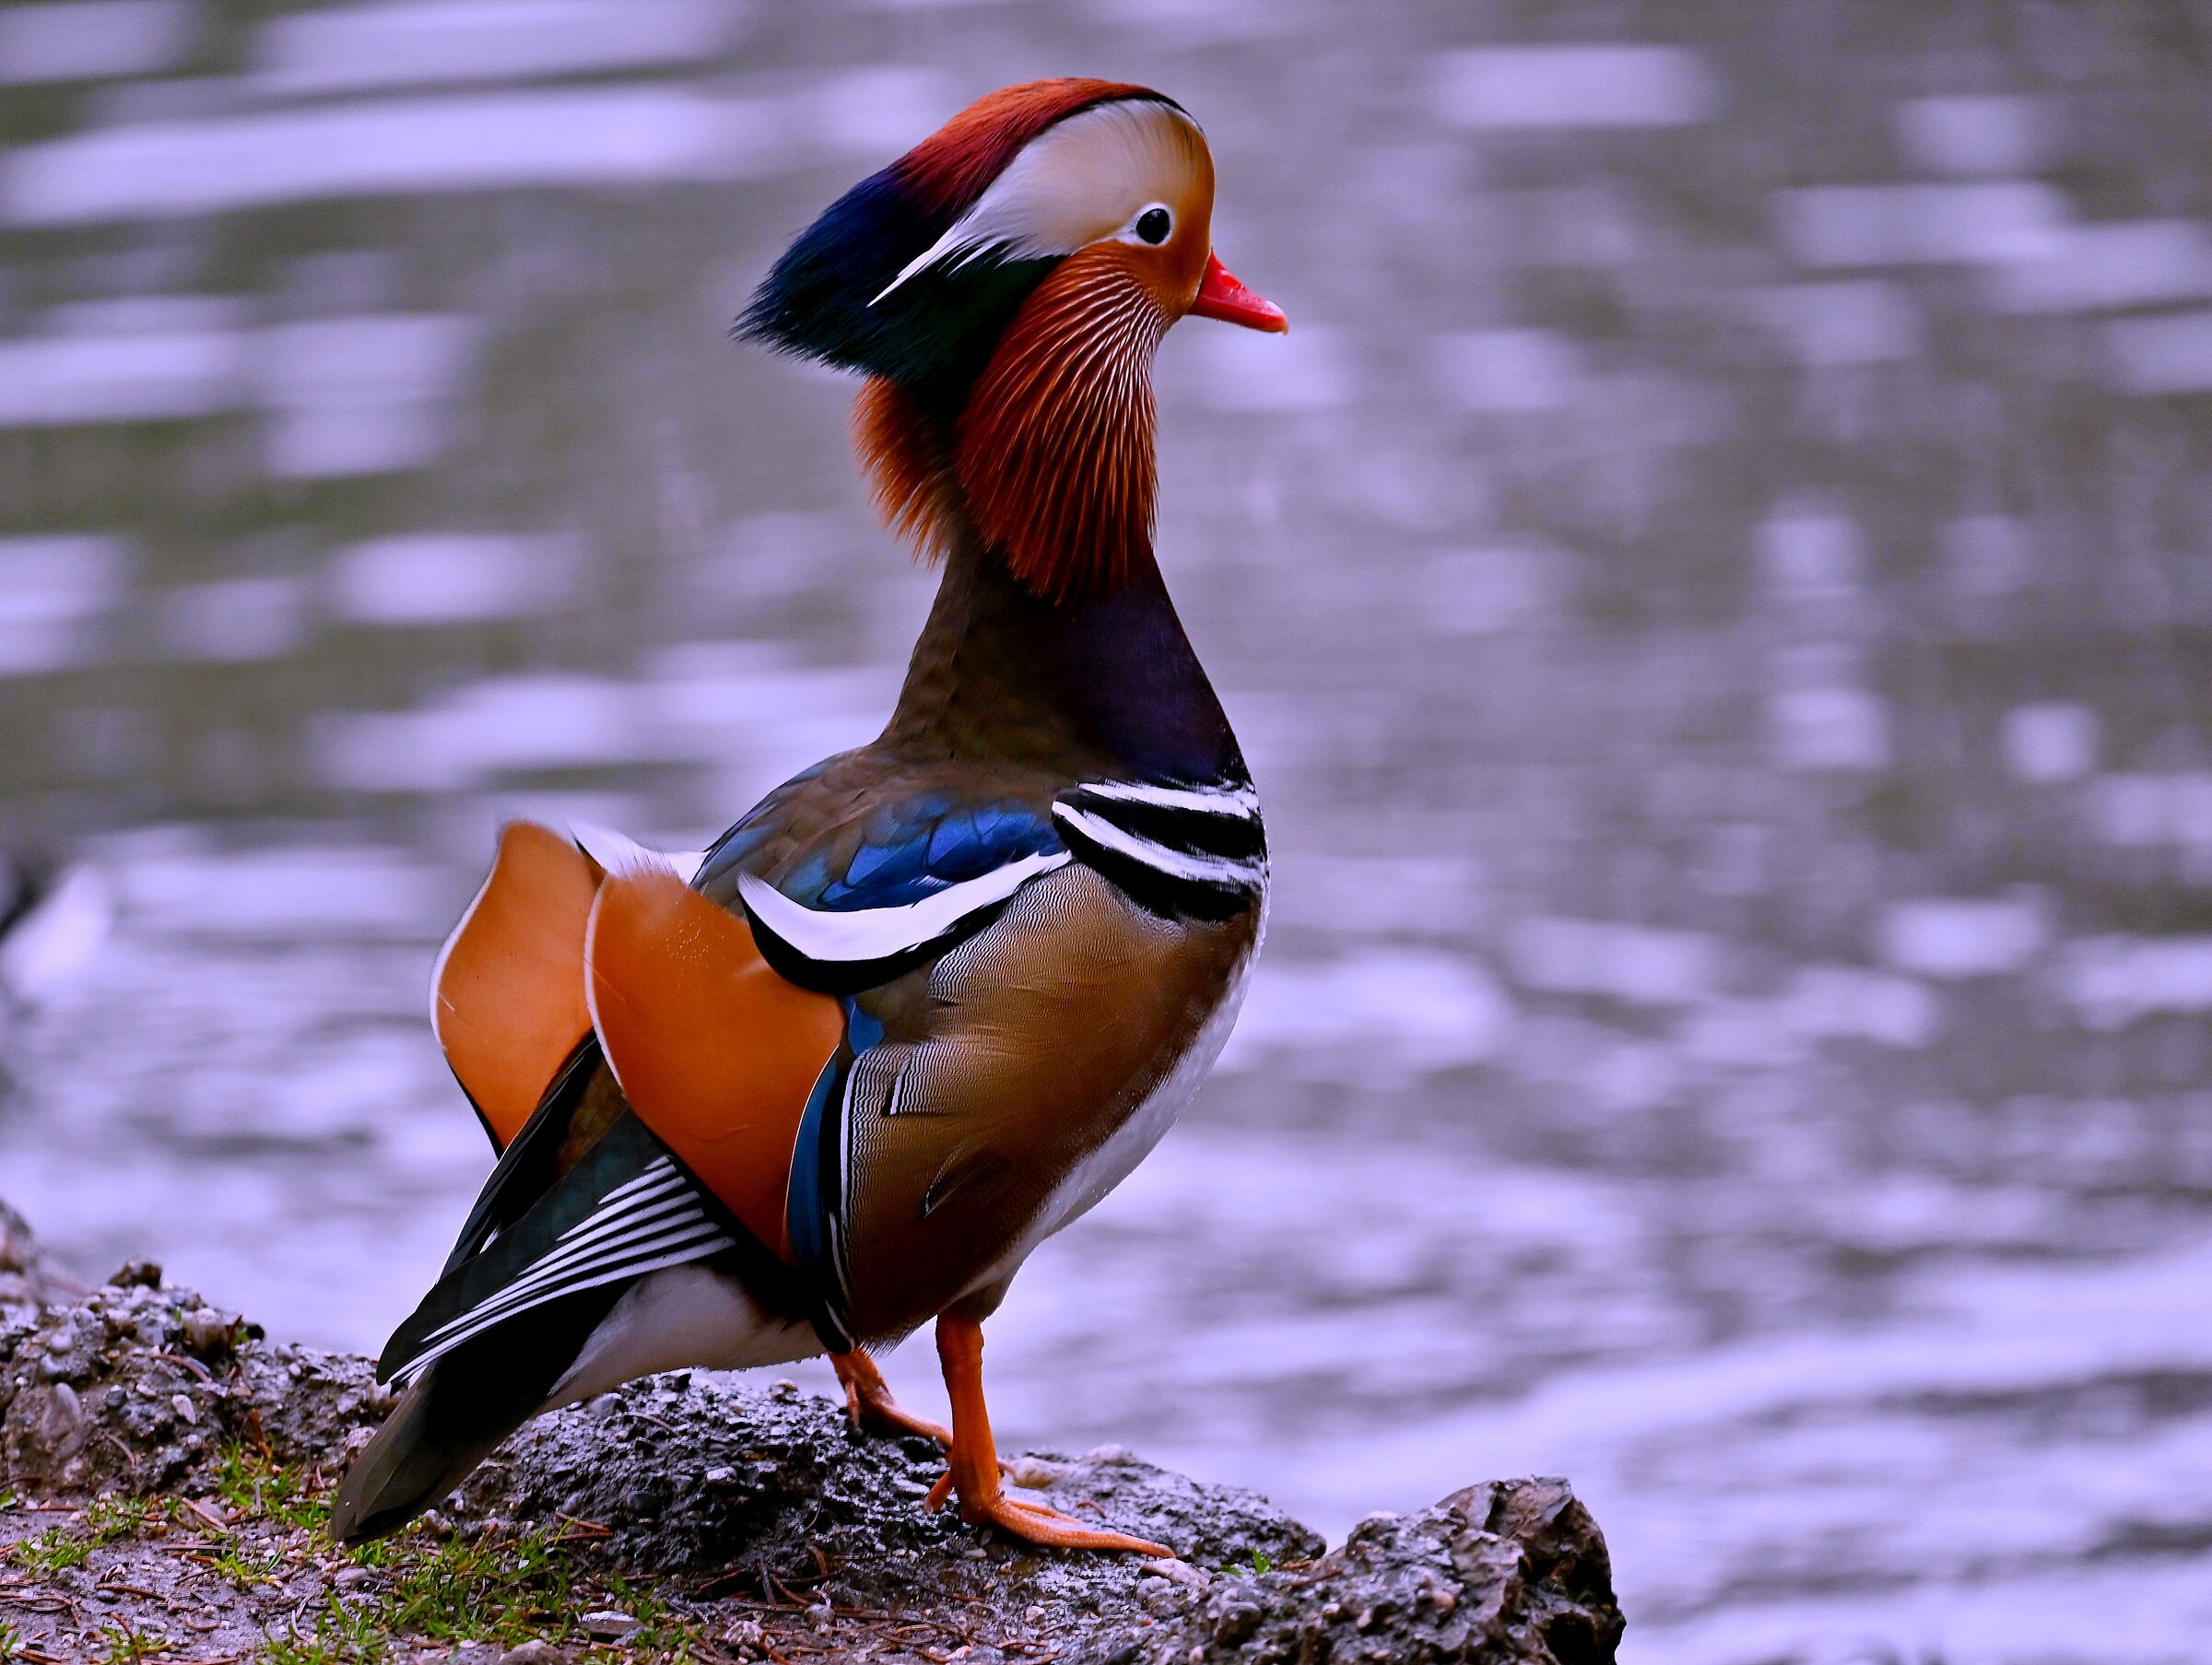 Mandarin duck - Pond Villa Reale Monza 2...